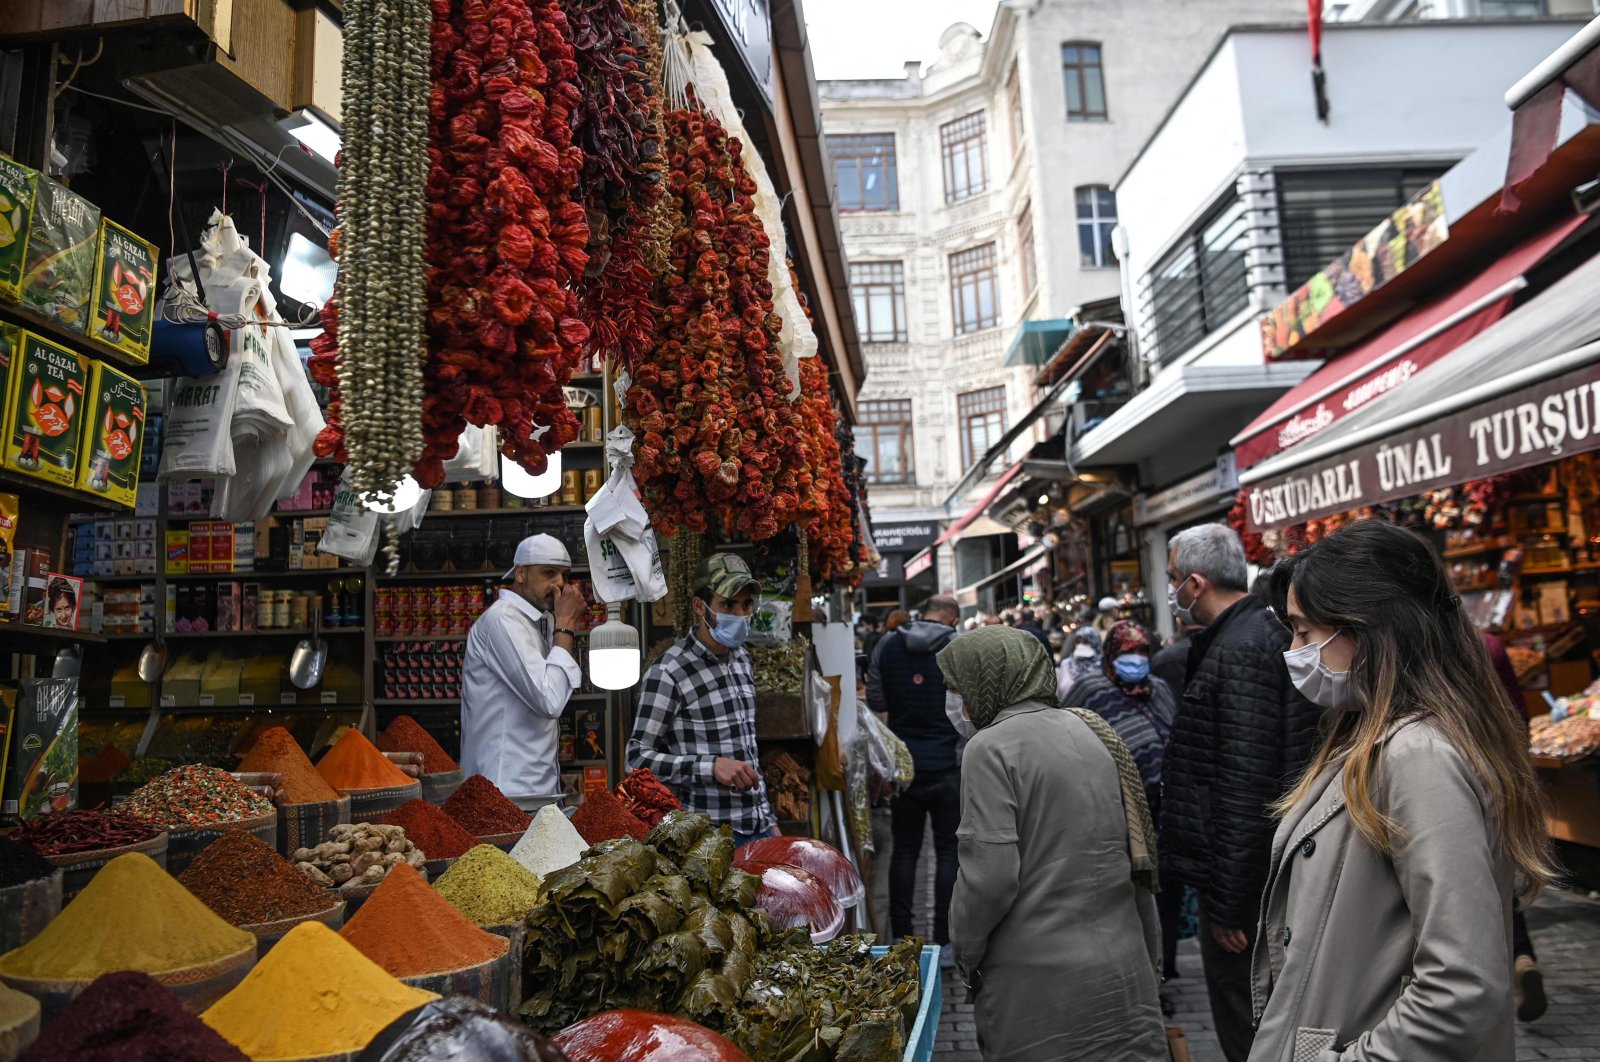 People shop near the Spice Bazaar in the Eminönü neighborhood in Istanbul, Turkey, April 27, 2021. (AFP Photo)